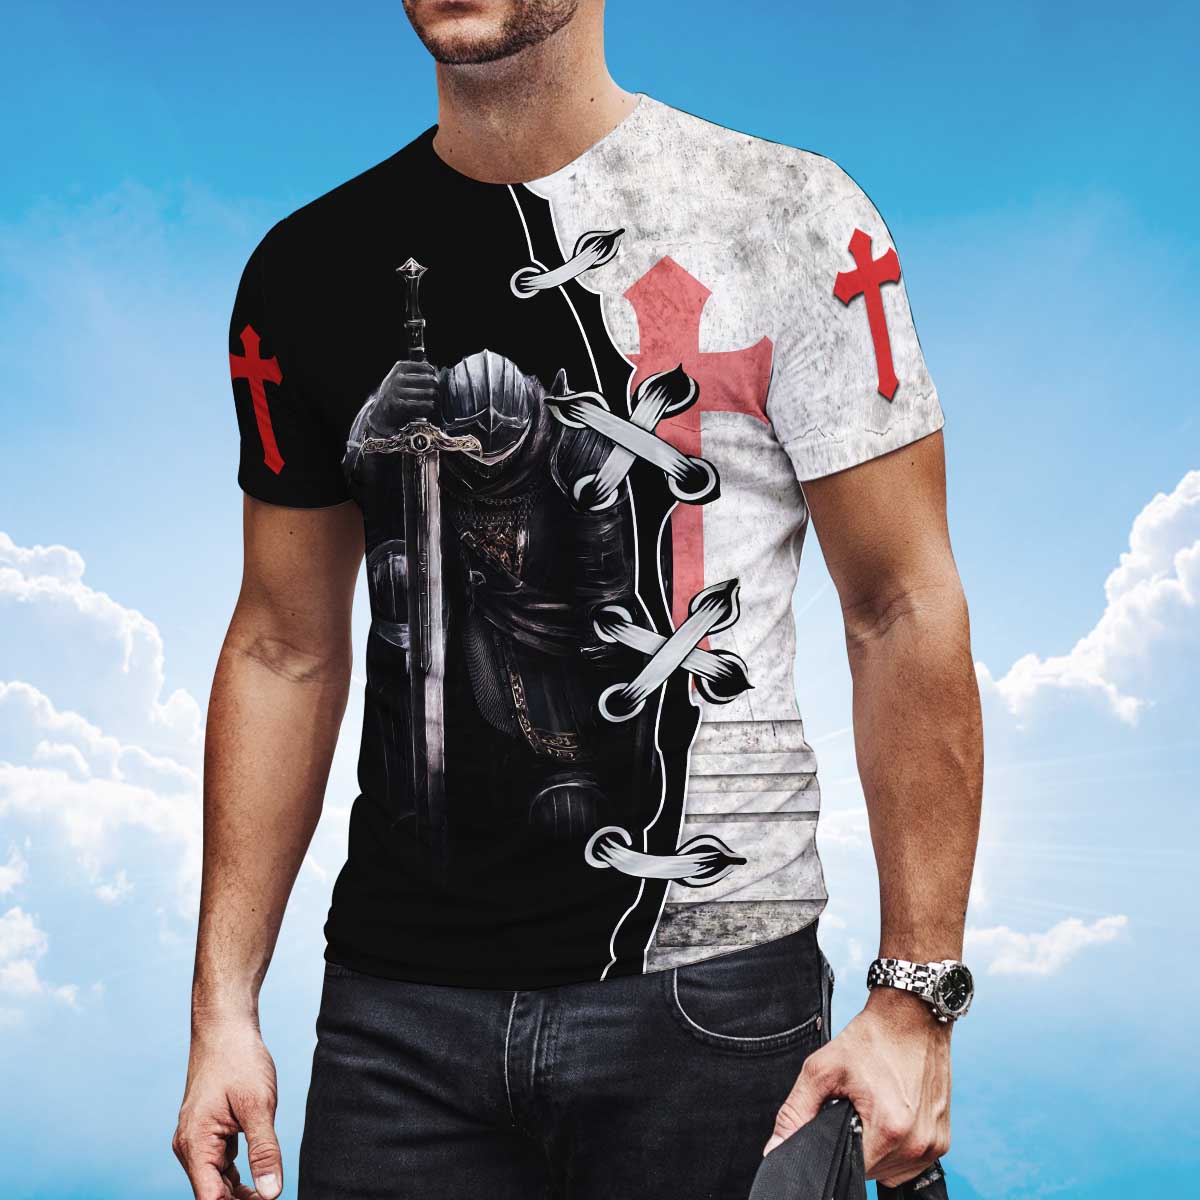 Knight Templar 3D Shirt I May Not Be Perfect Knight Templar Tshirt